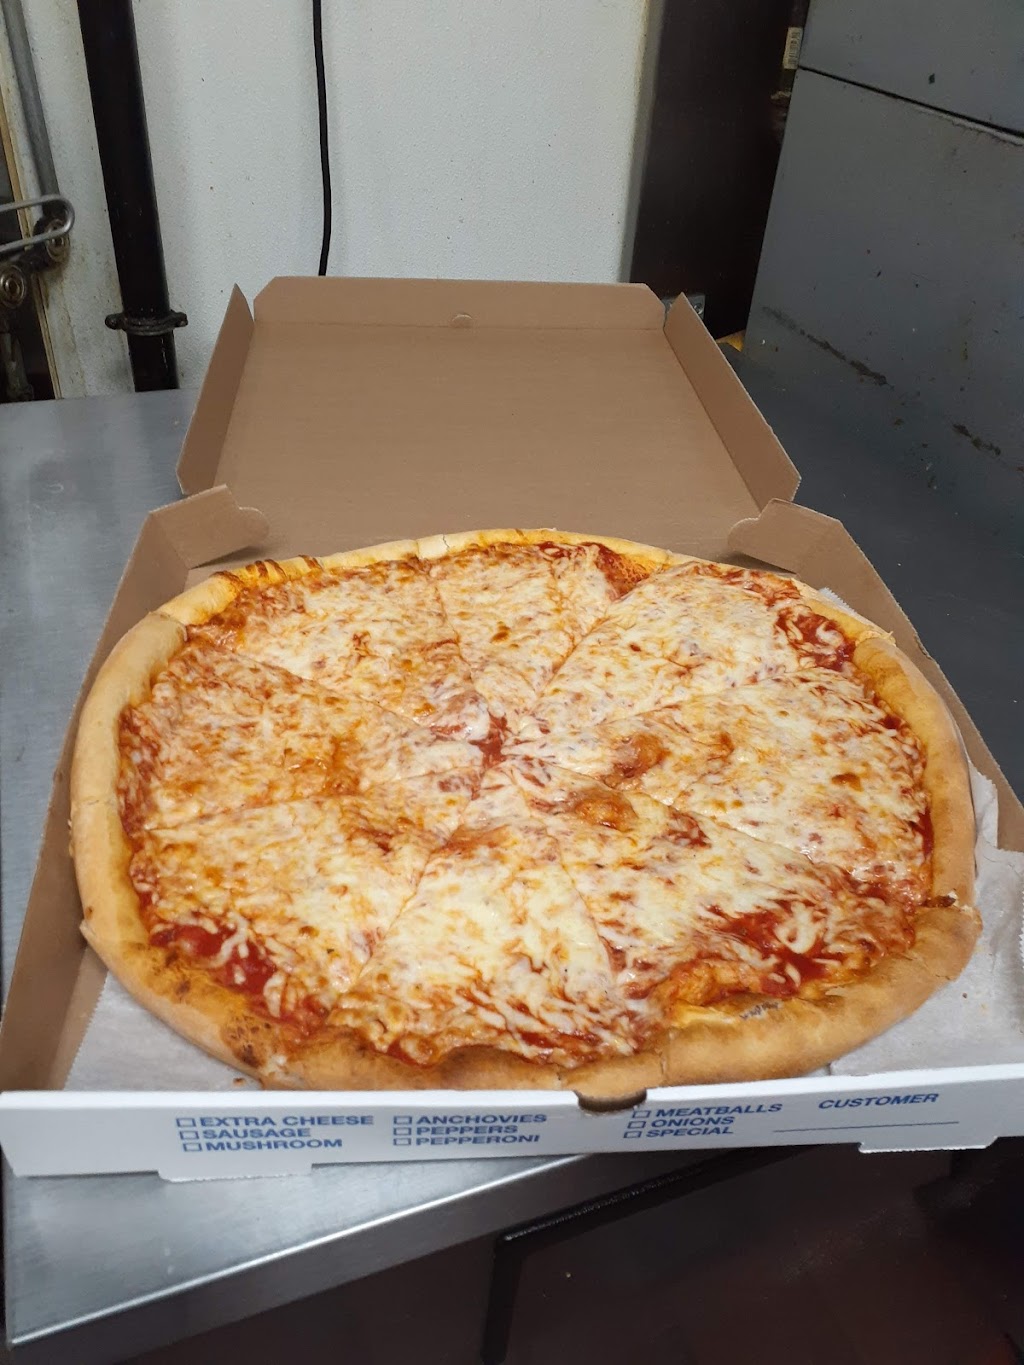 Park Deli Too & Pizza | 2787, 51 Commercial Ave, New Brunswick, NJ 08901 | Phone: (732) 214-8800